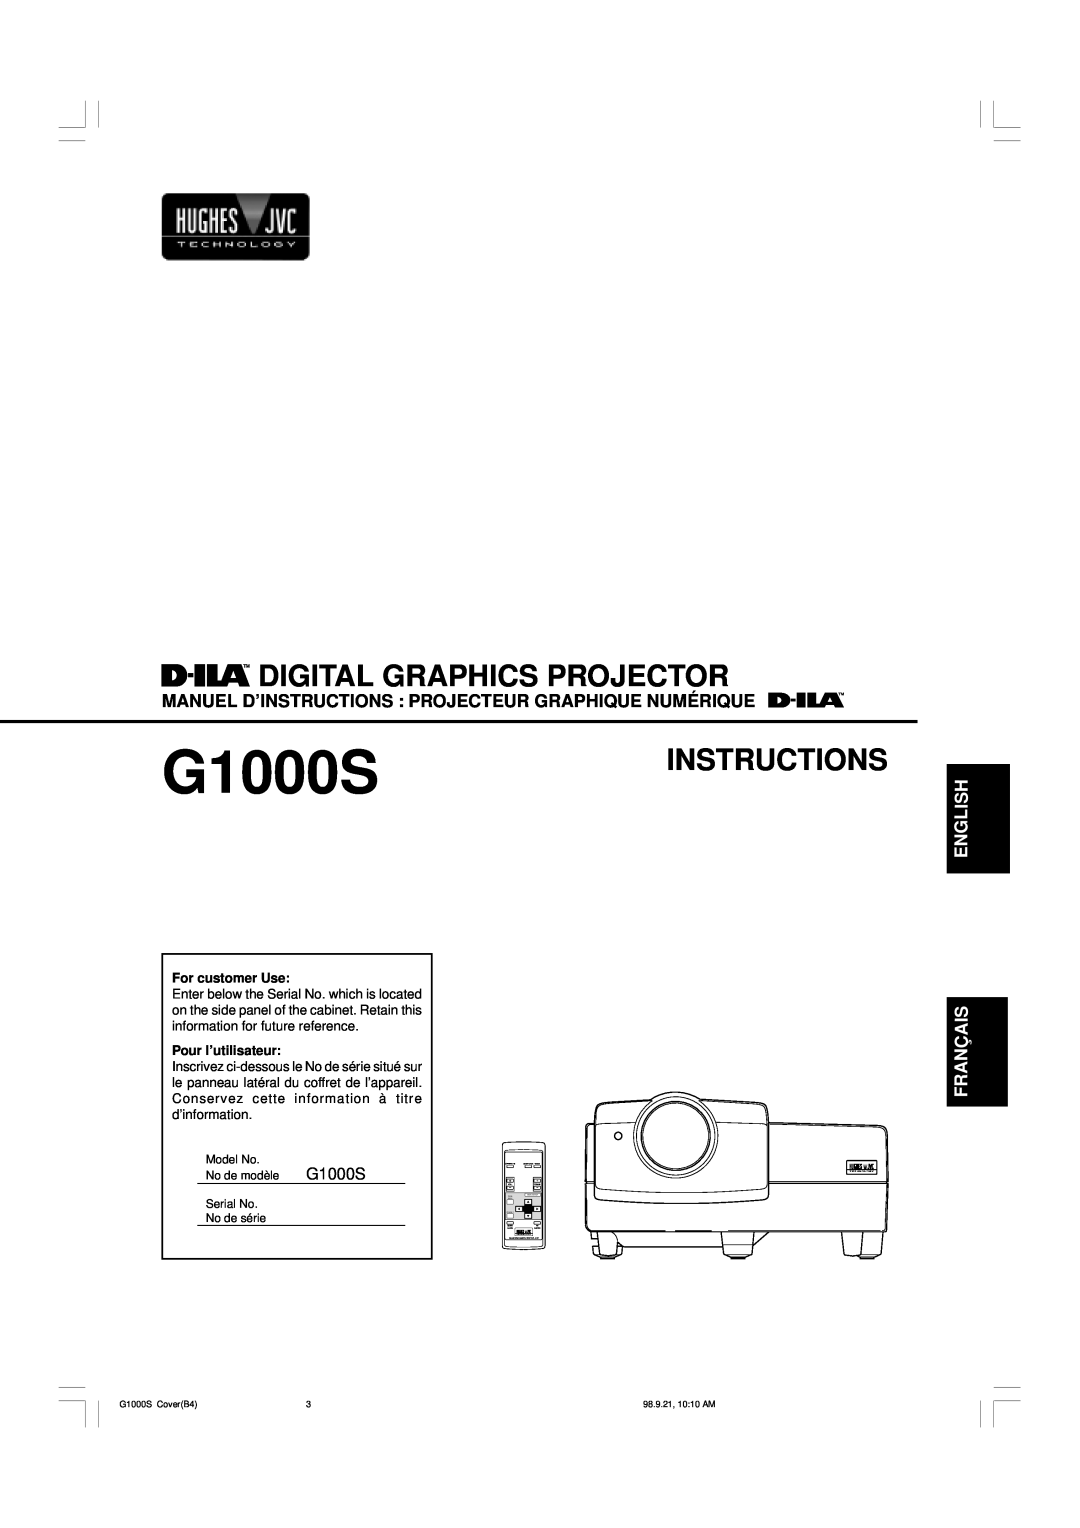 JVC manual Digital Graphics Projector, G1000SINSTRUCTIONS, Manuel D’Instructions Projecteur Graphique Numérique, Back 